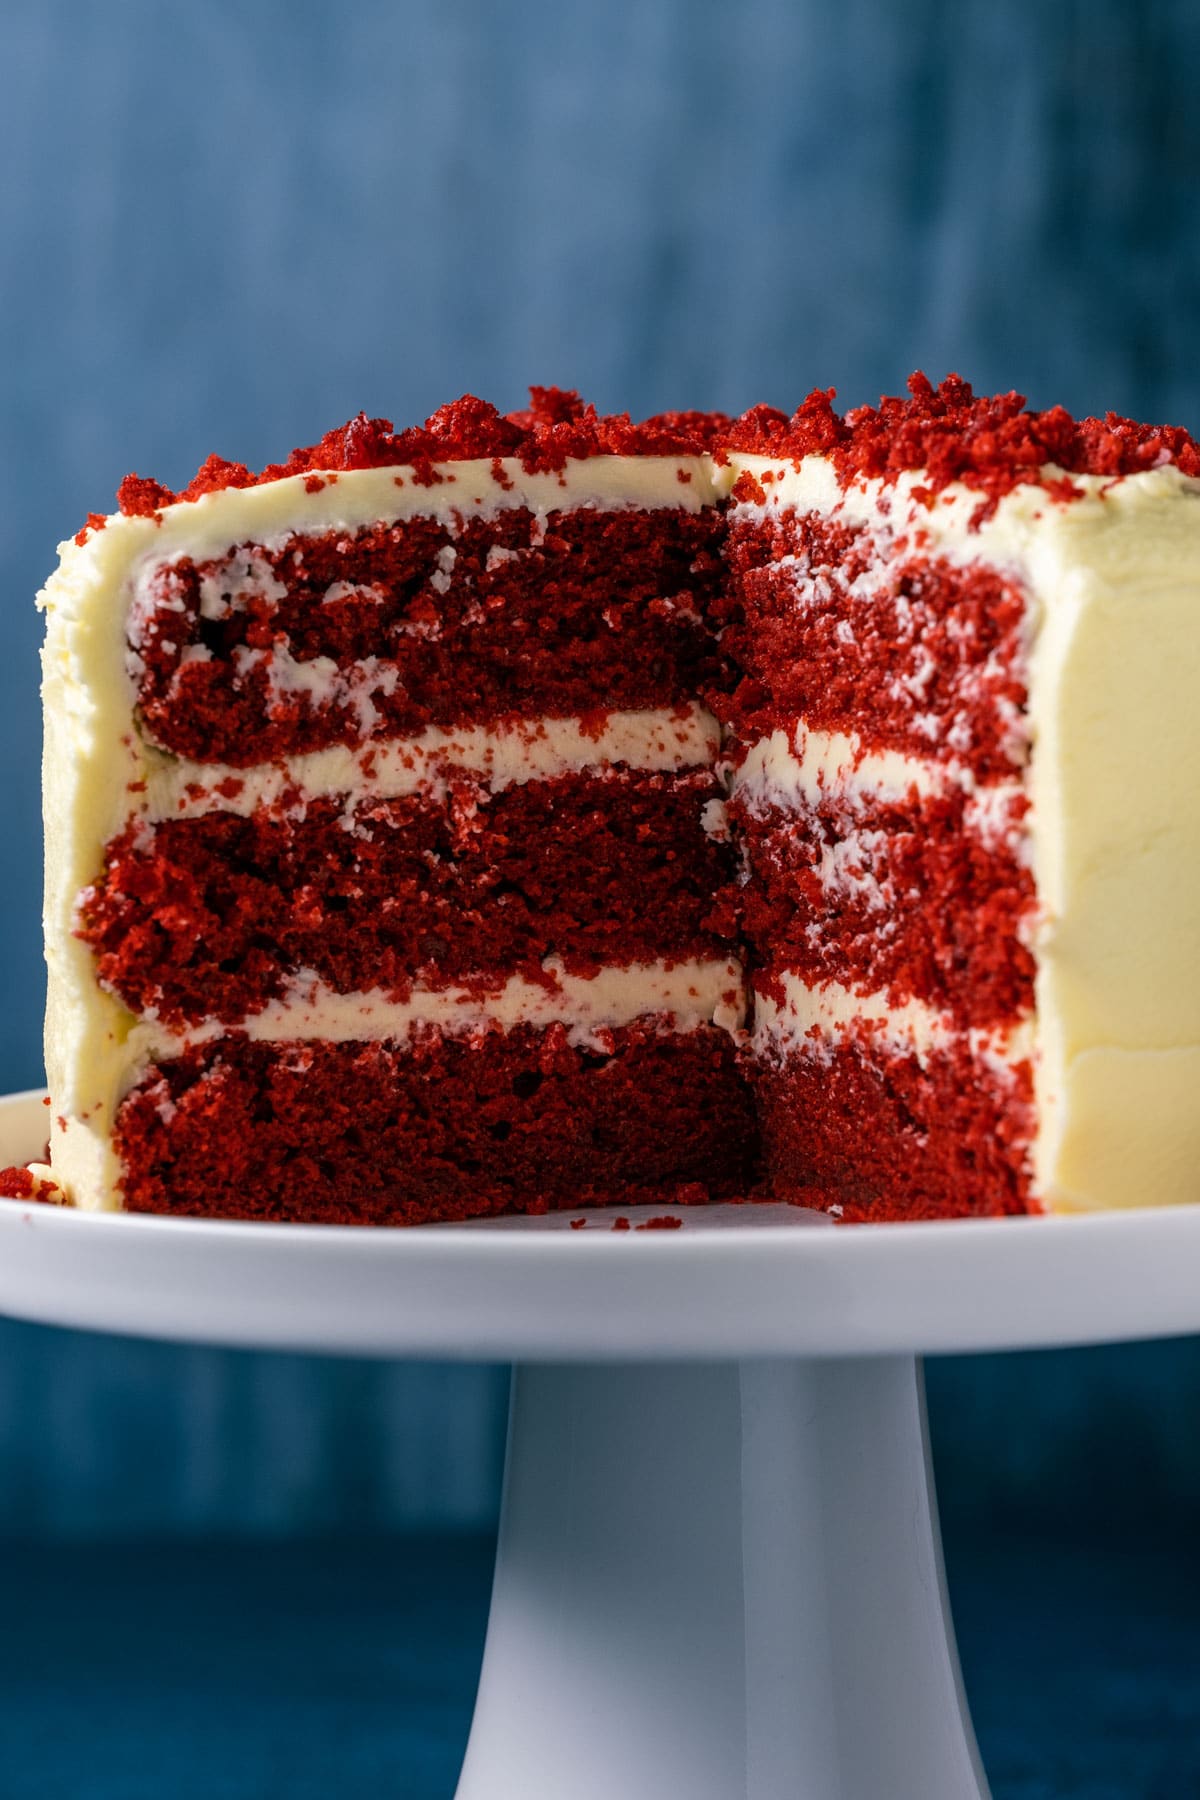 Vegan red velvet cake with slices missing, on a white cake stand.